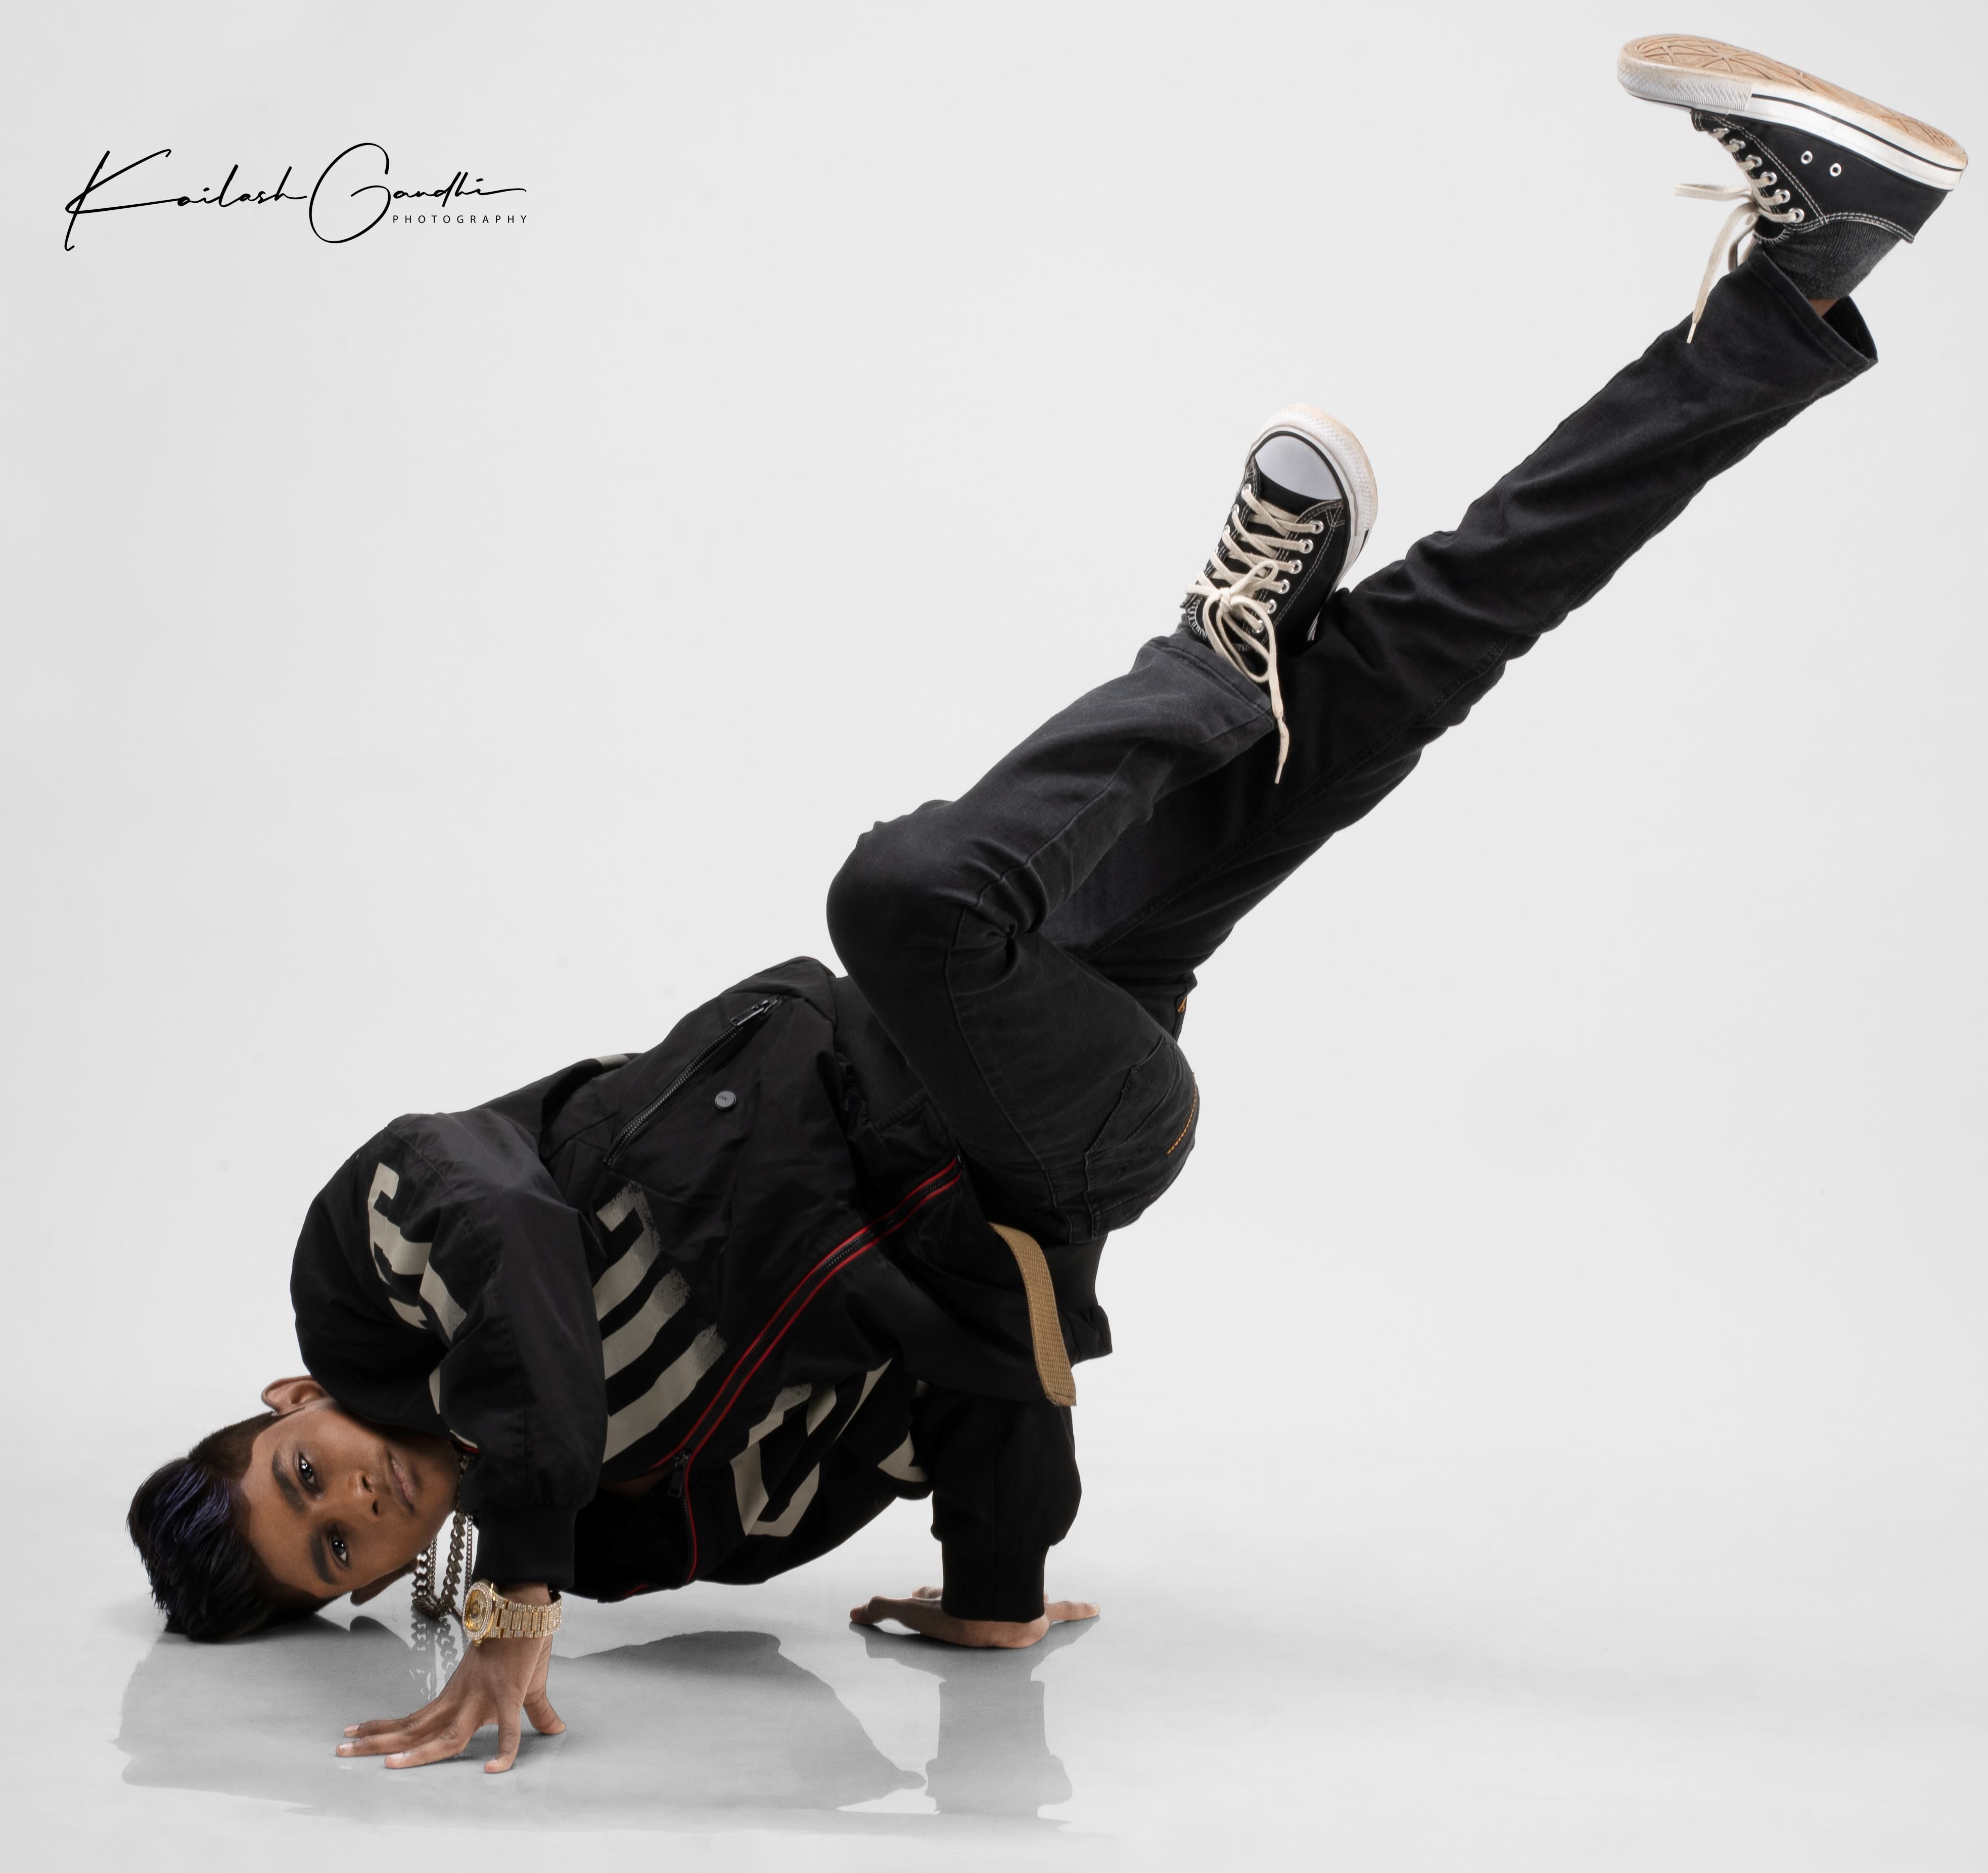 A Man Hip Hop Dancer or Bboy Freezes in One Pose on a White Background.  Bboy Doing Stylish Stunts. Stock Photo - Image of break, action: 186236660